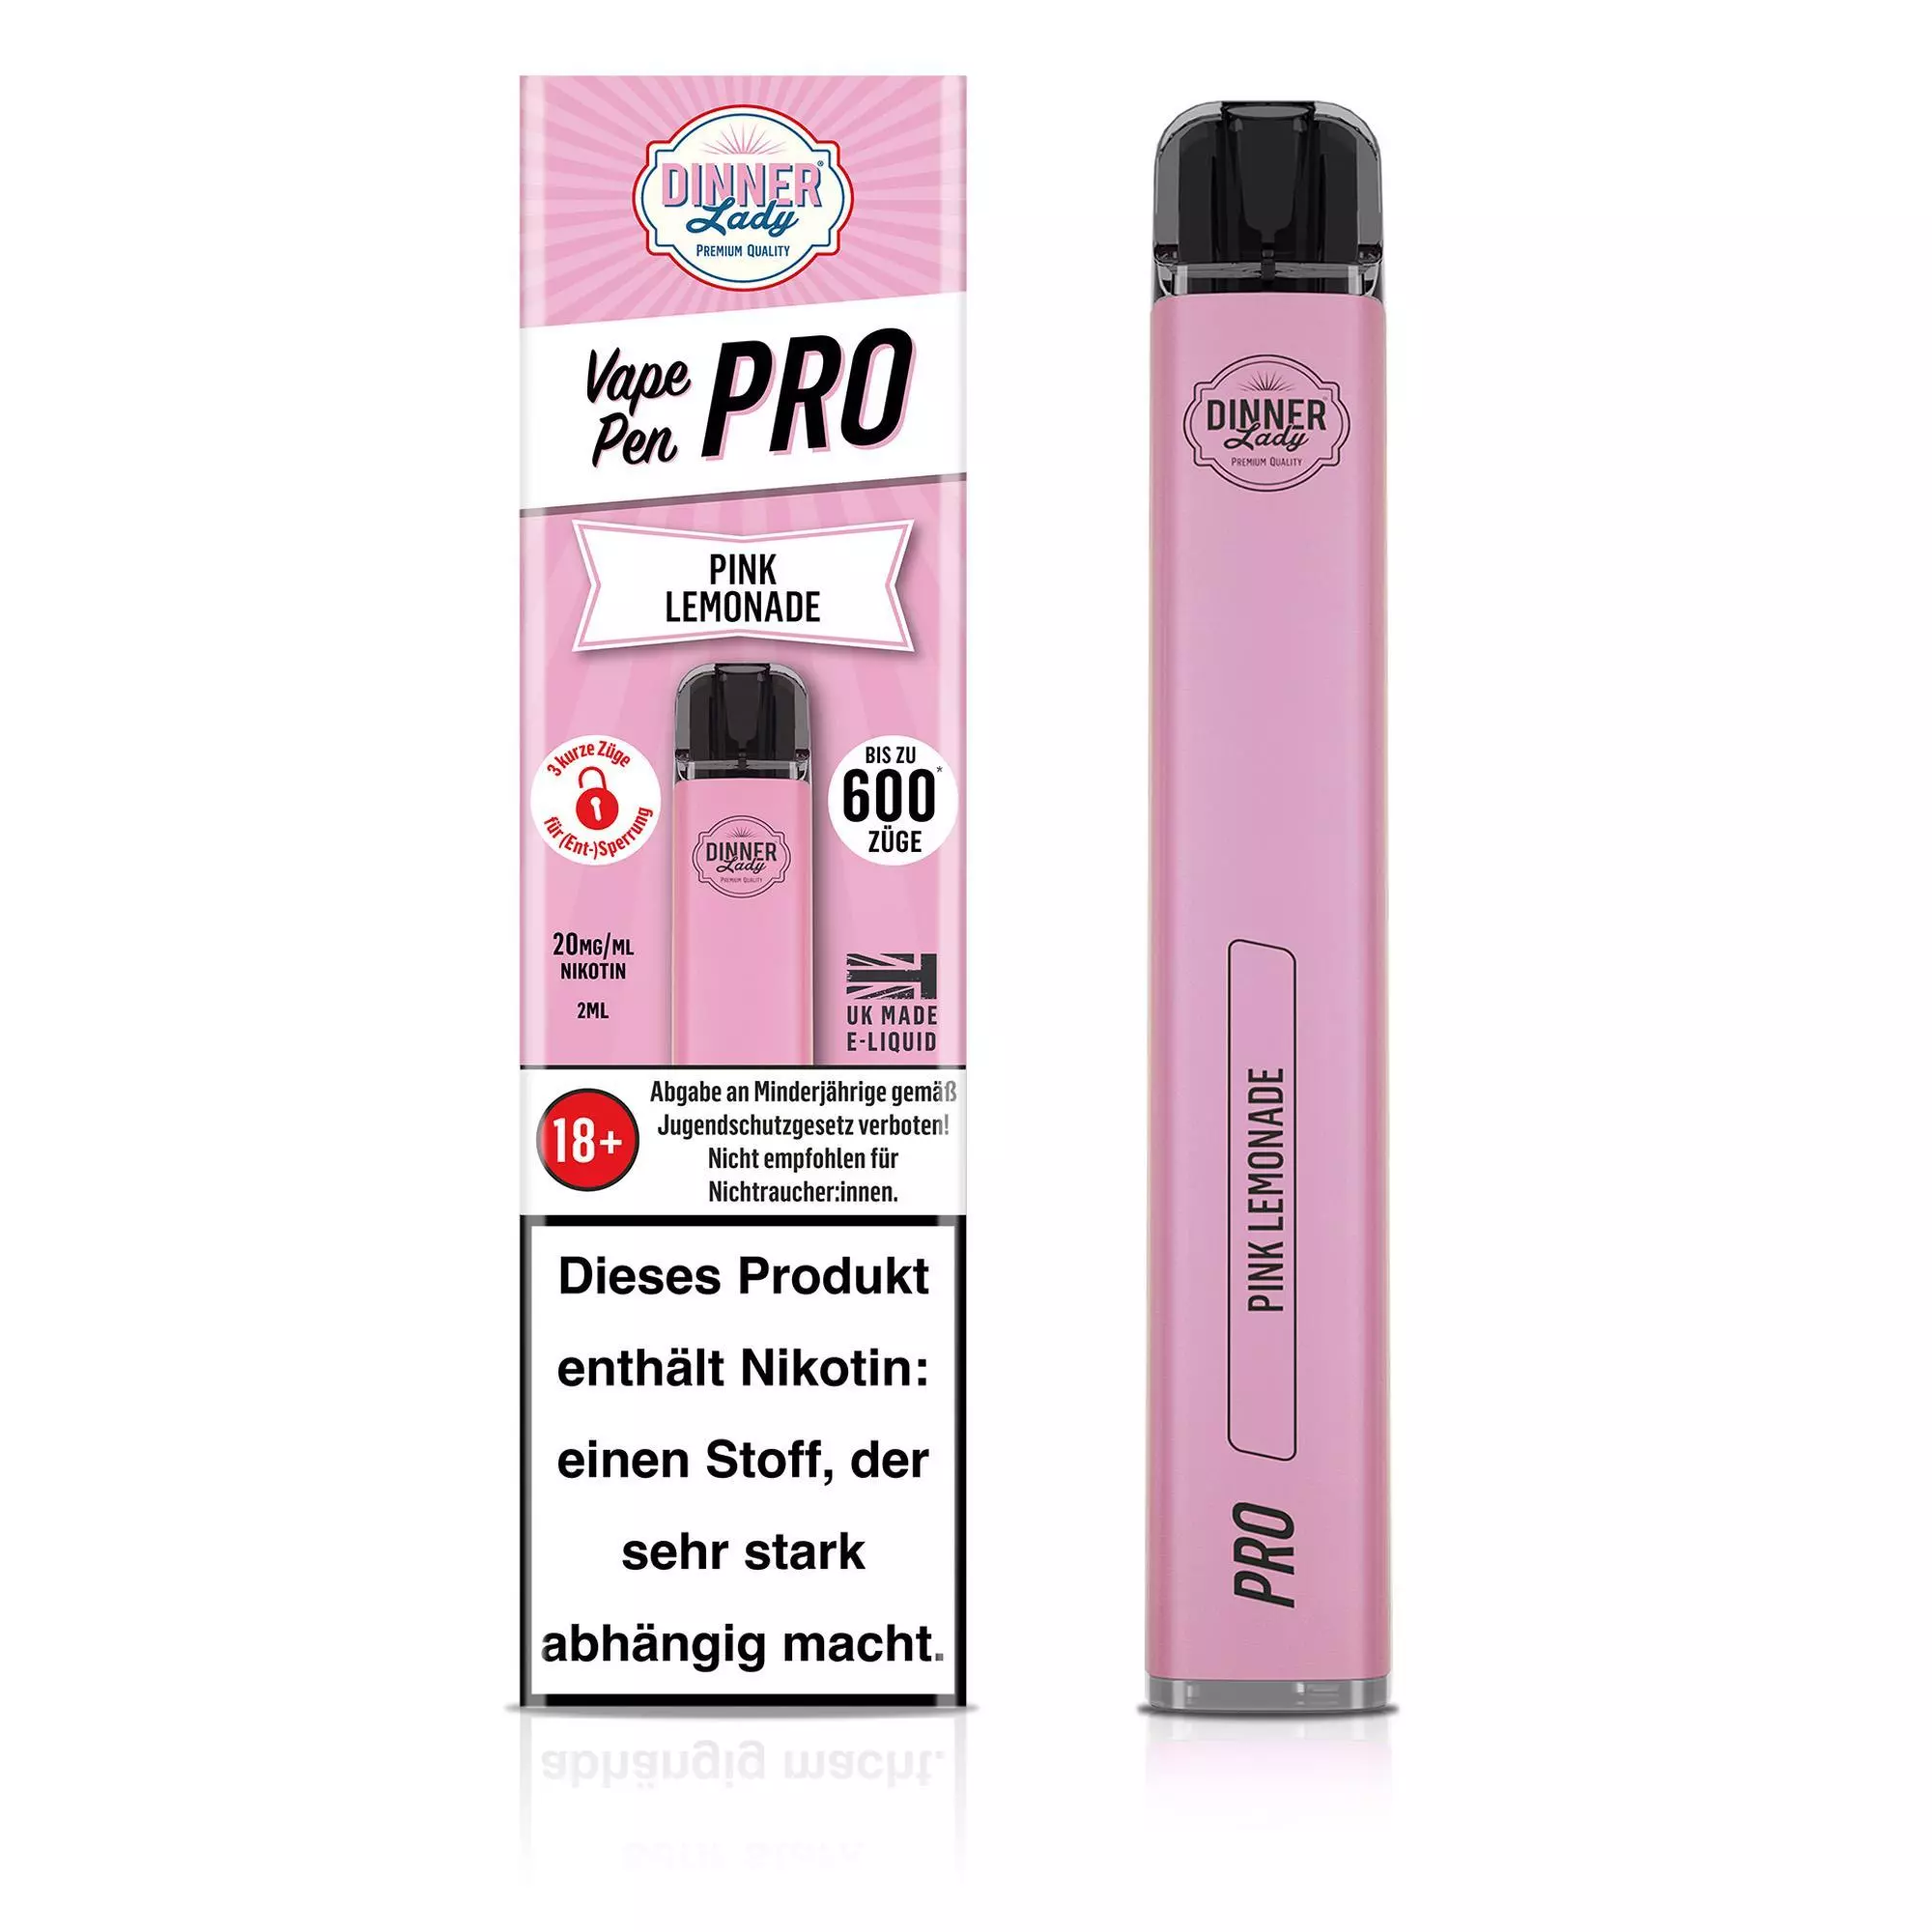 D.Lady Vape Pen Pro Pink Lemonade 20mg/ml Nikotin 